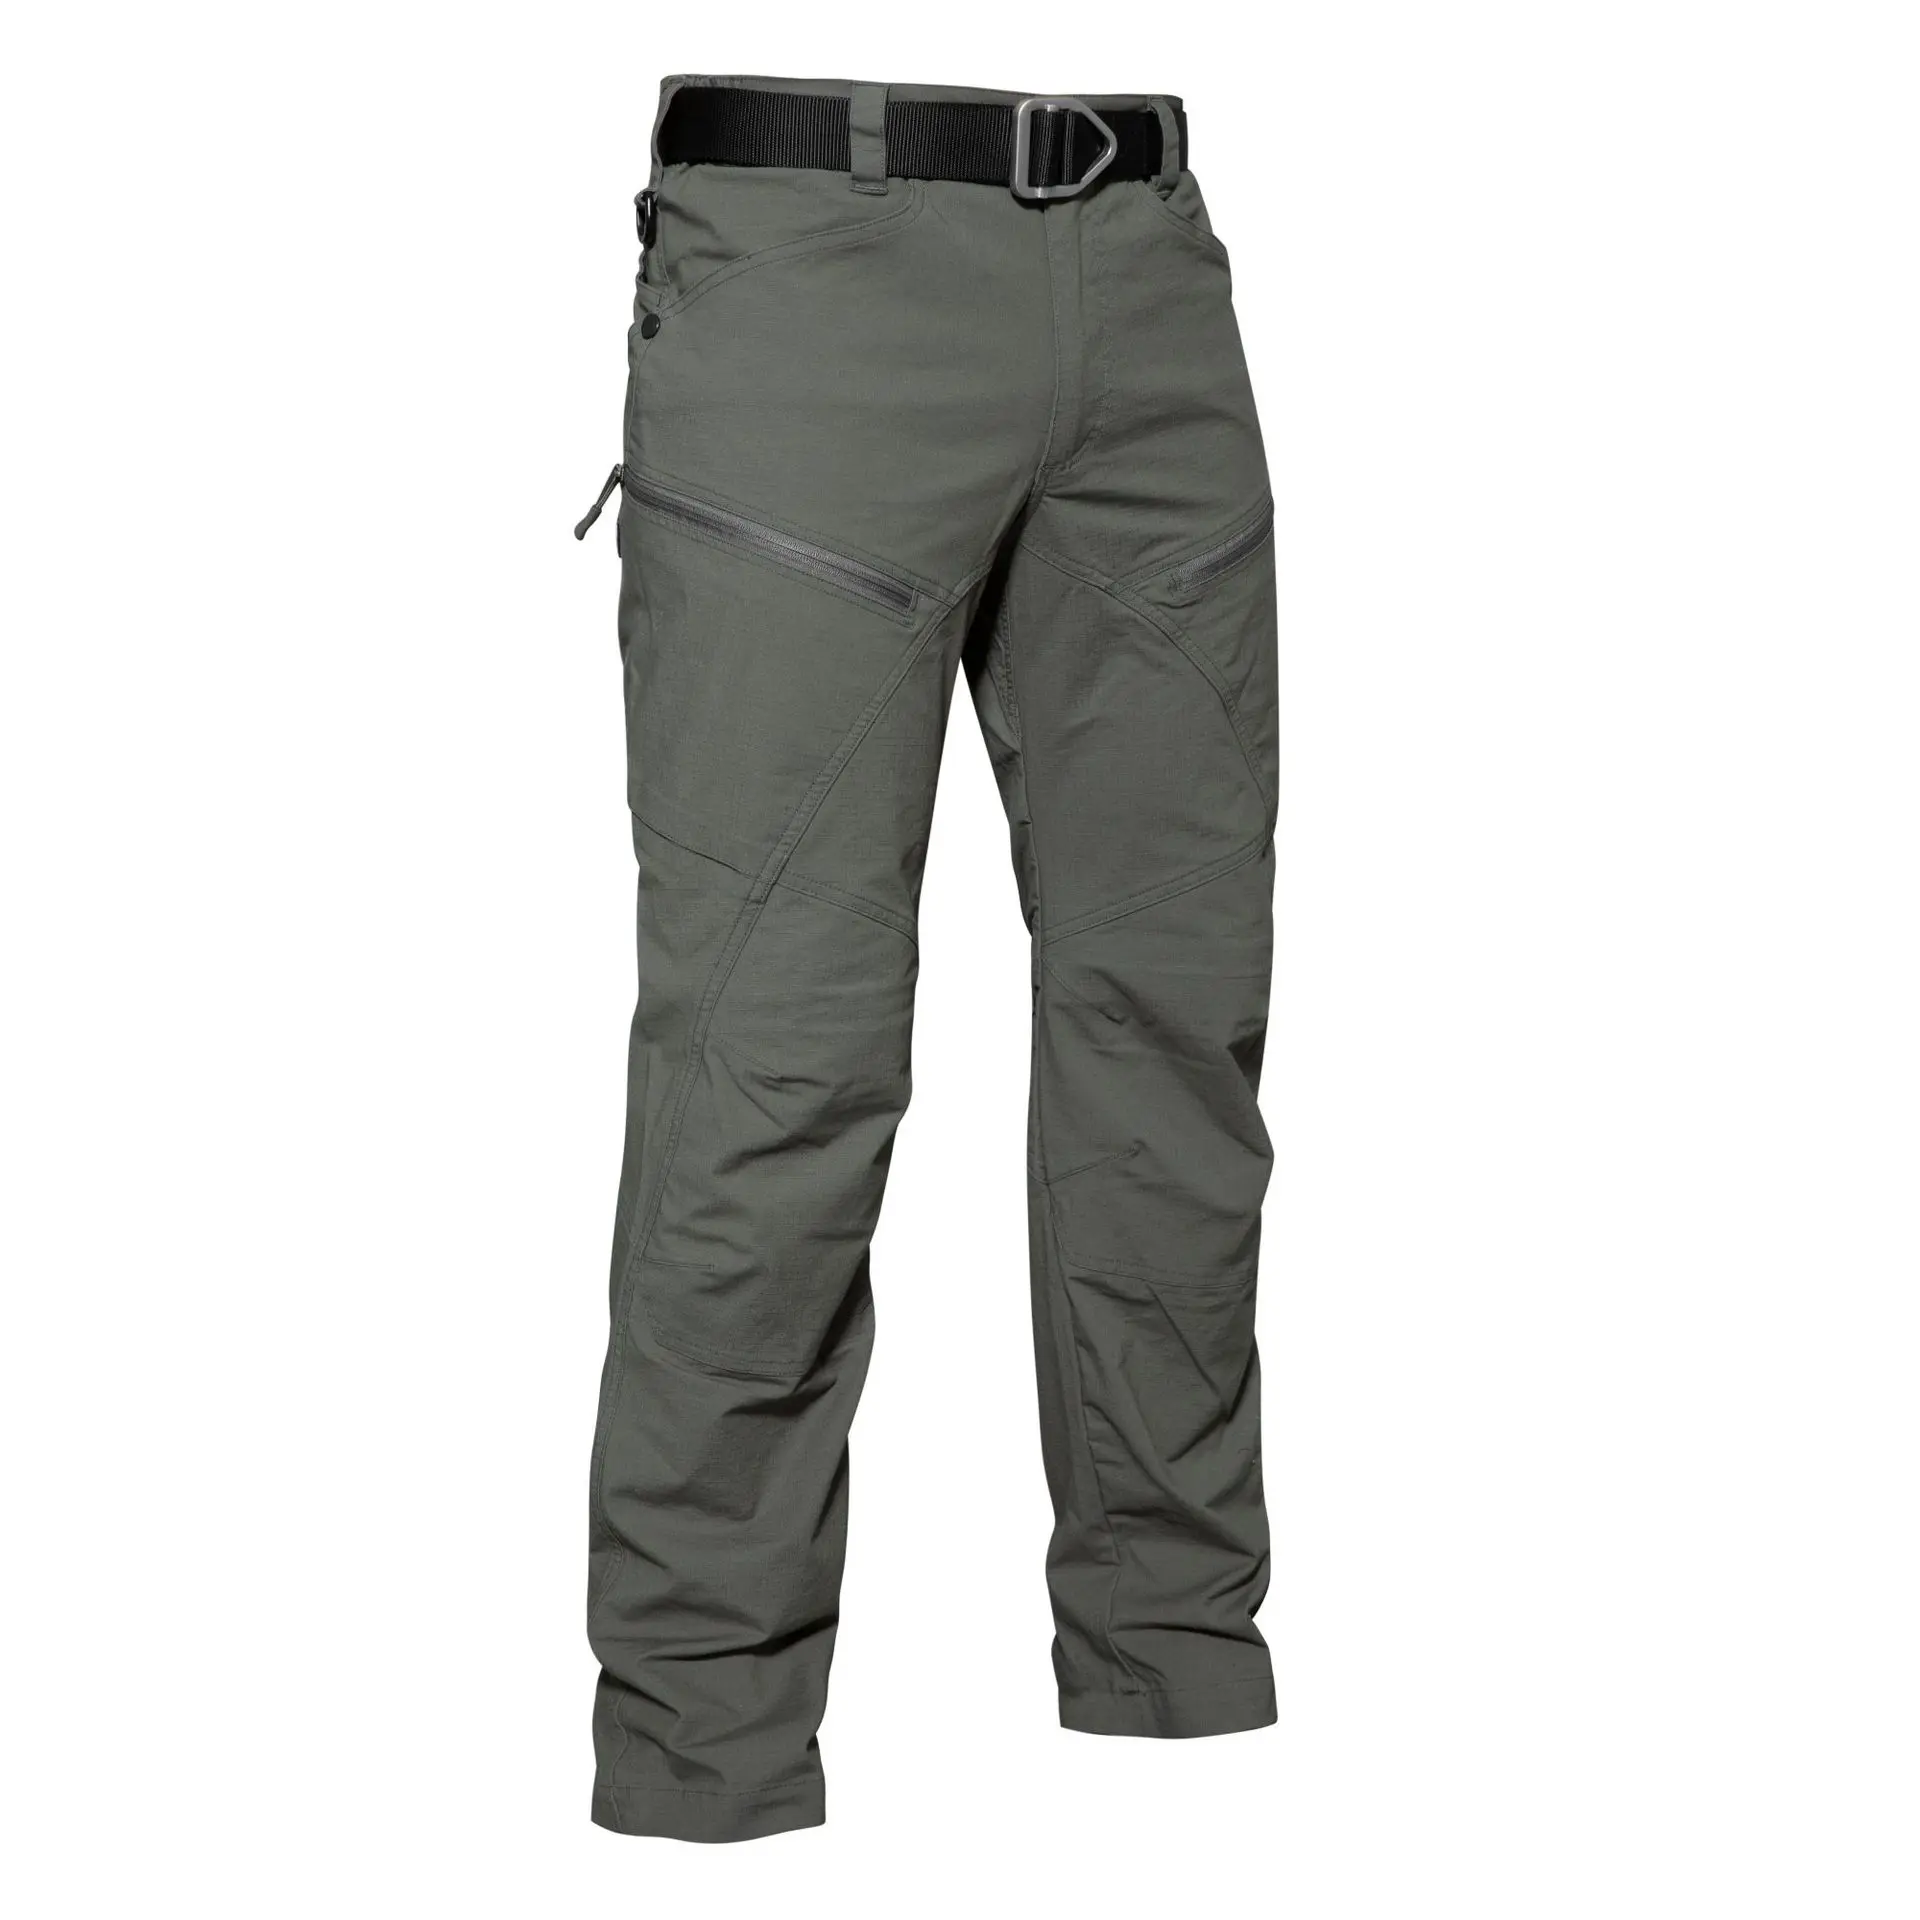 PAVEHAWK Summer Cargo Pants Men Khaki Black Camouflage Army Tactical Military Work Casual Trousers Jogger Sweatpants Streetwear